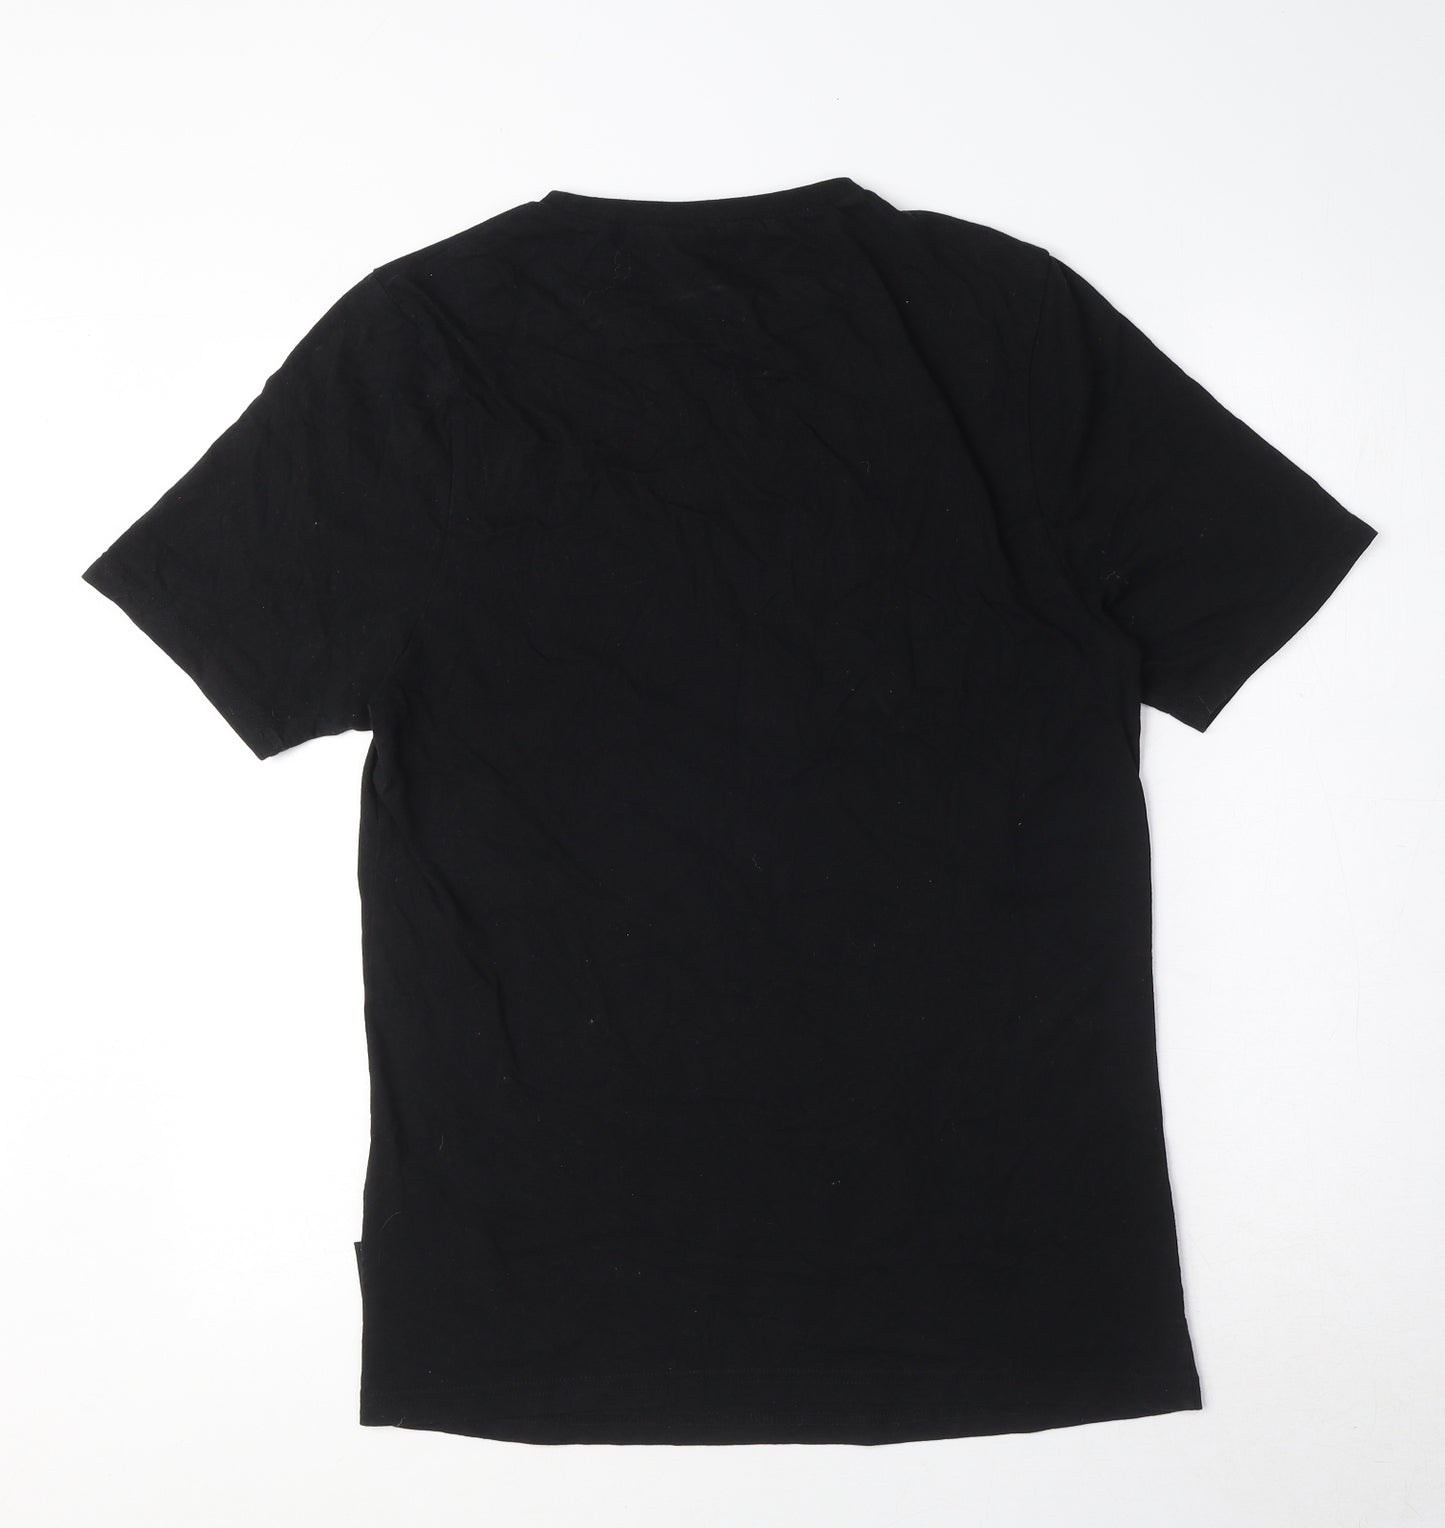 Jaded London Mens Black Cotton T-Shirt Size S Round Neck